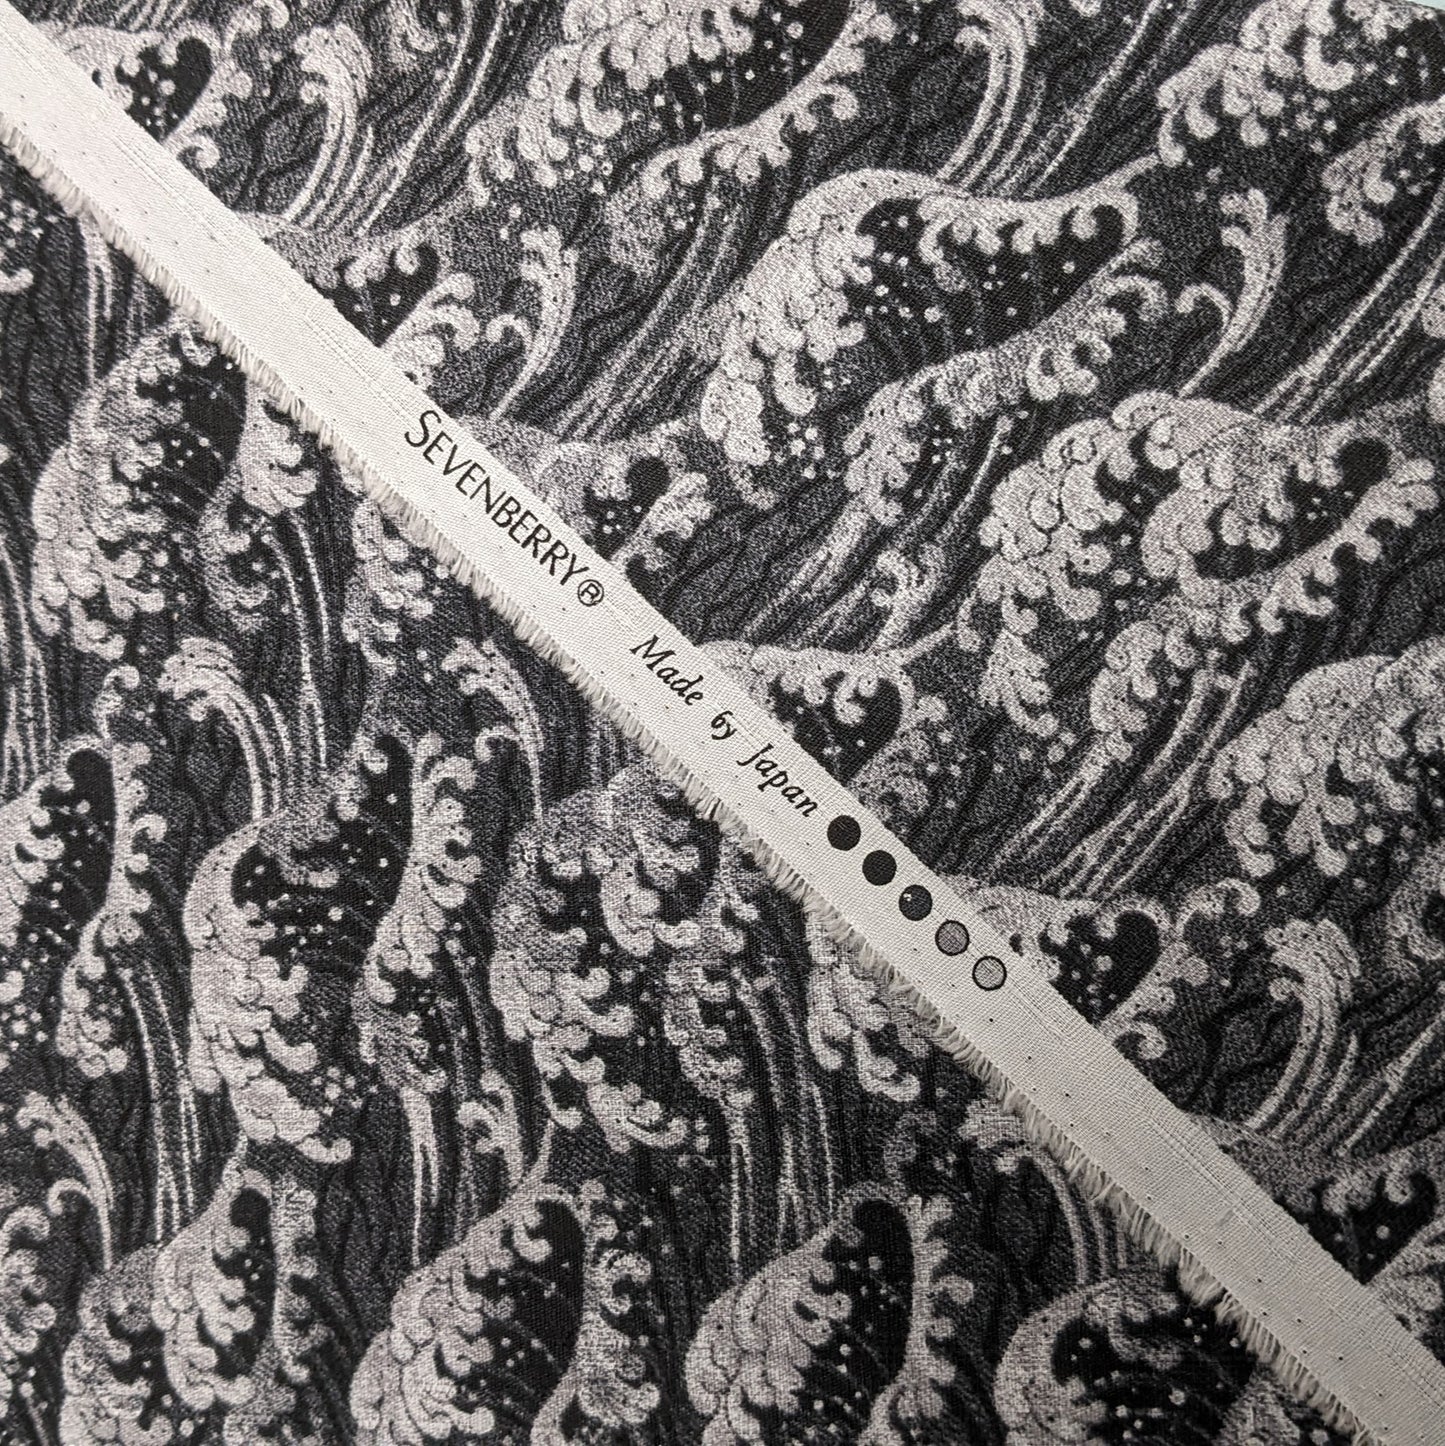 Japanese Fabric - Hokusai Style Waves - Black and Grey